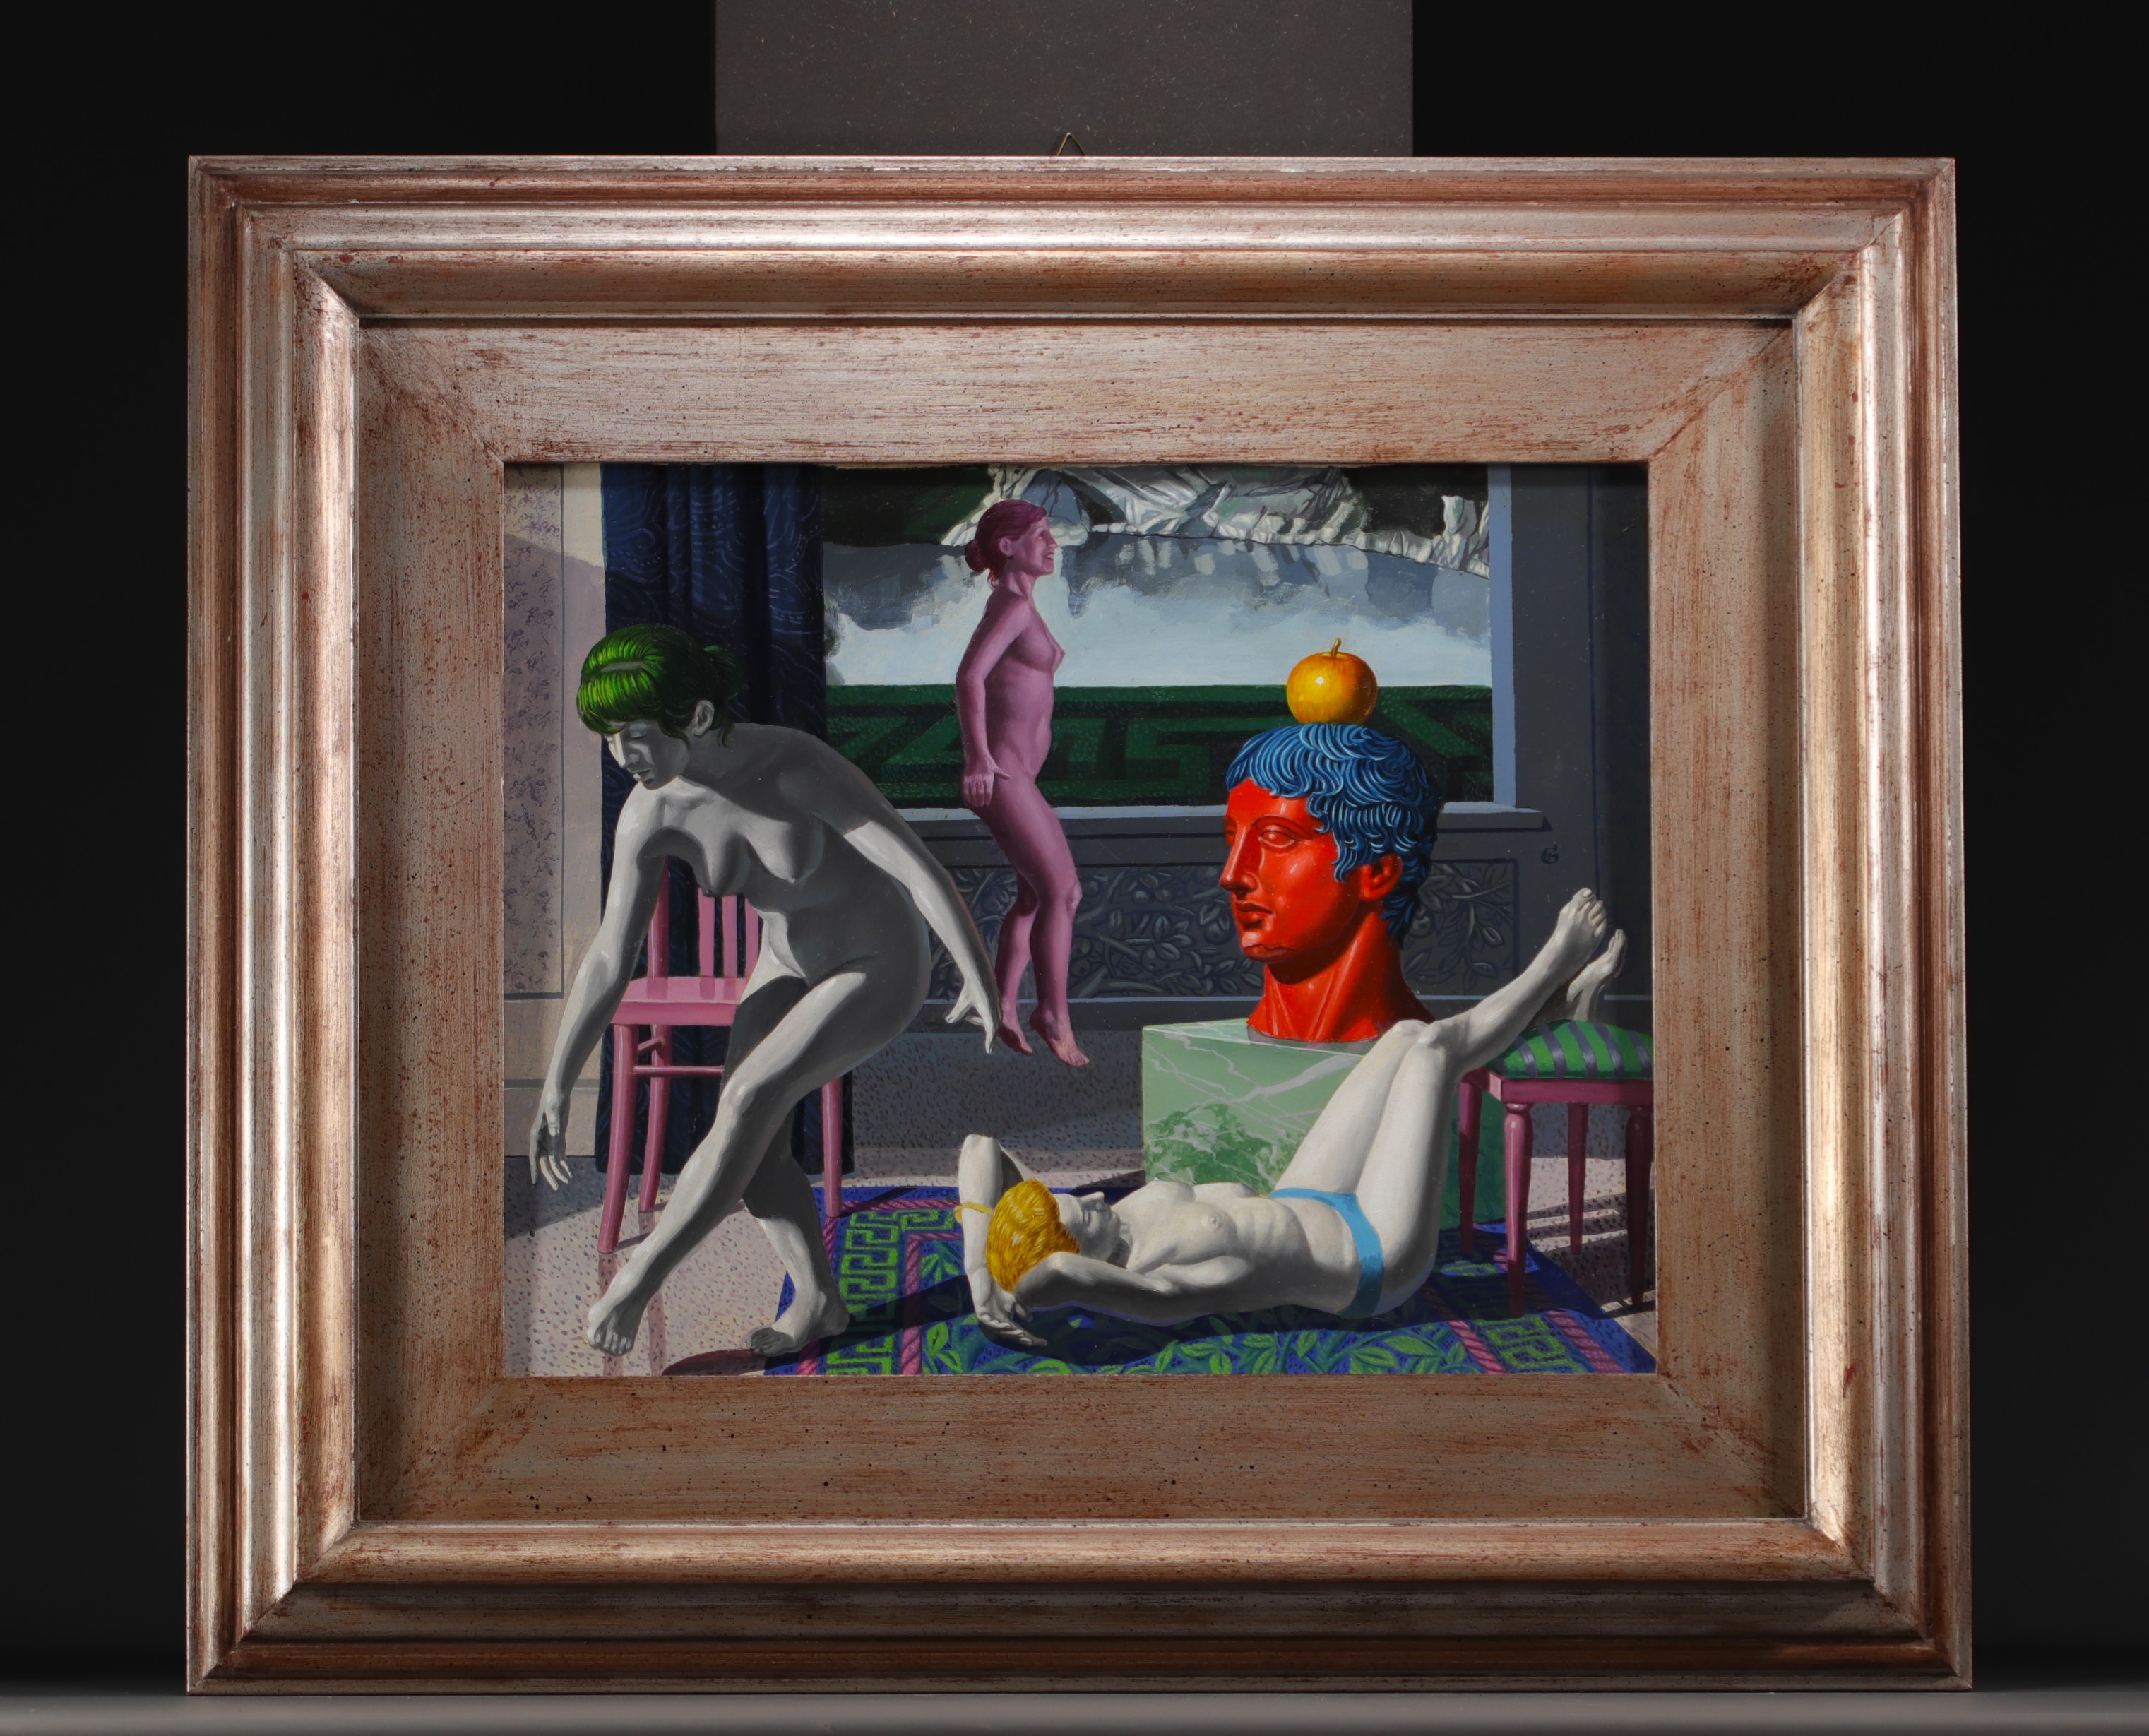 Giuseppe MALLAI (1945-2007) "Surrealist scene with figures" Oil on canvas. - Image 2 of 2